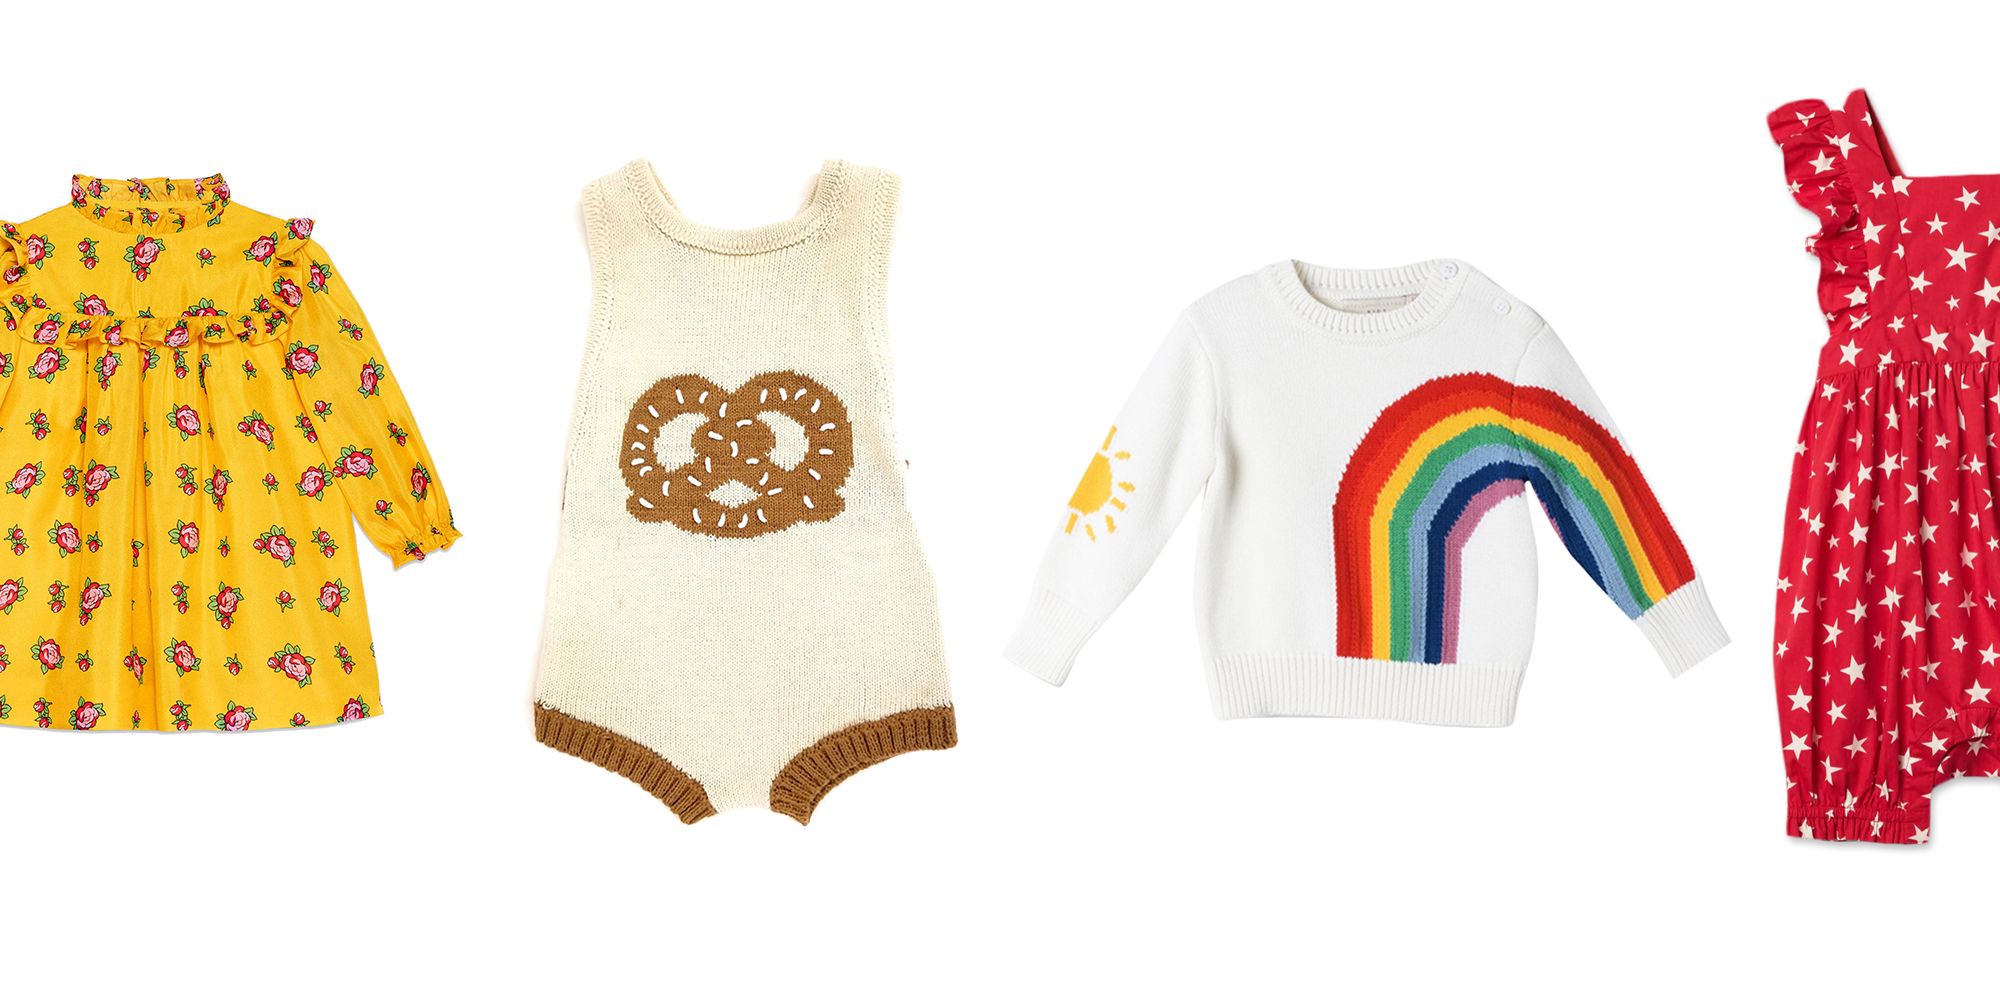 Designer Baby Clothes